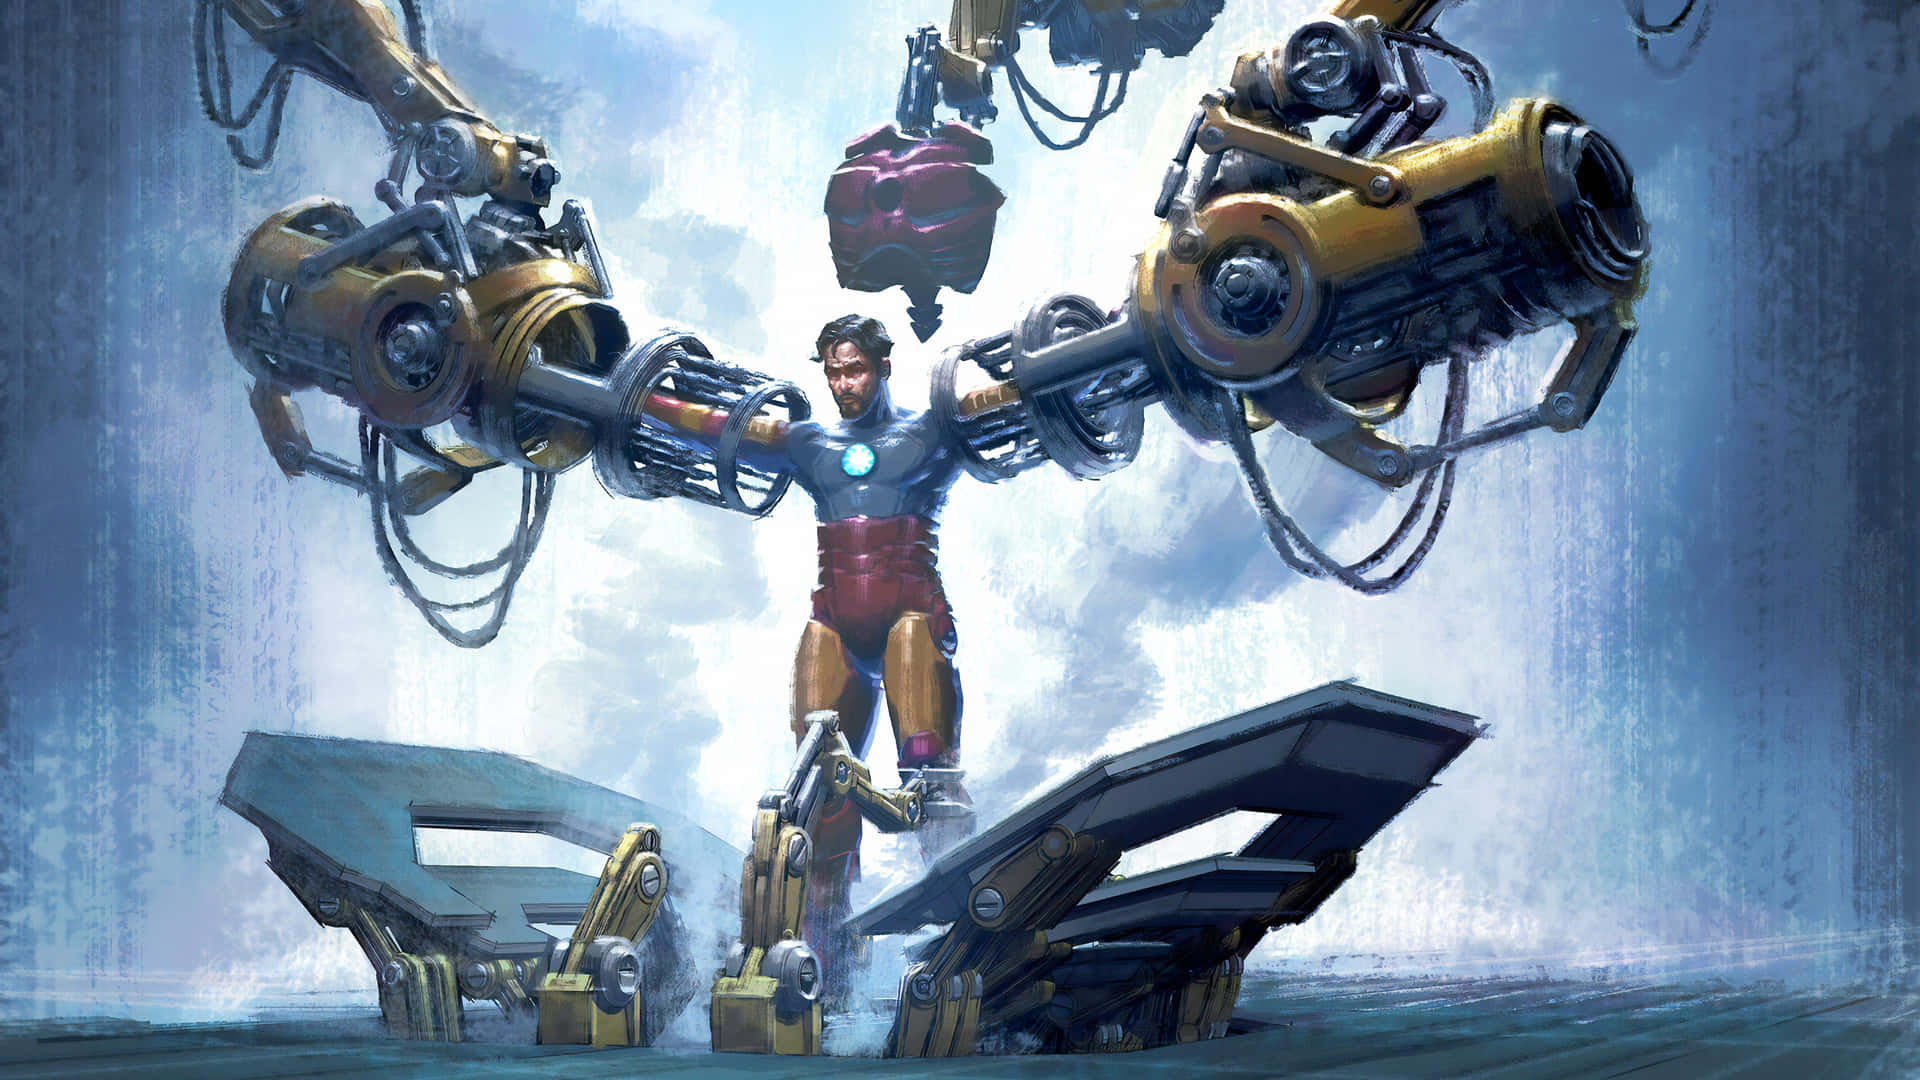 Iron Man Assembling Armor Background